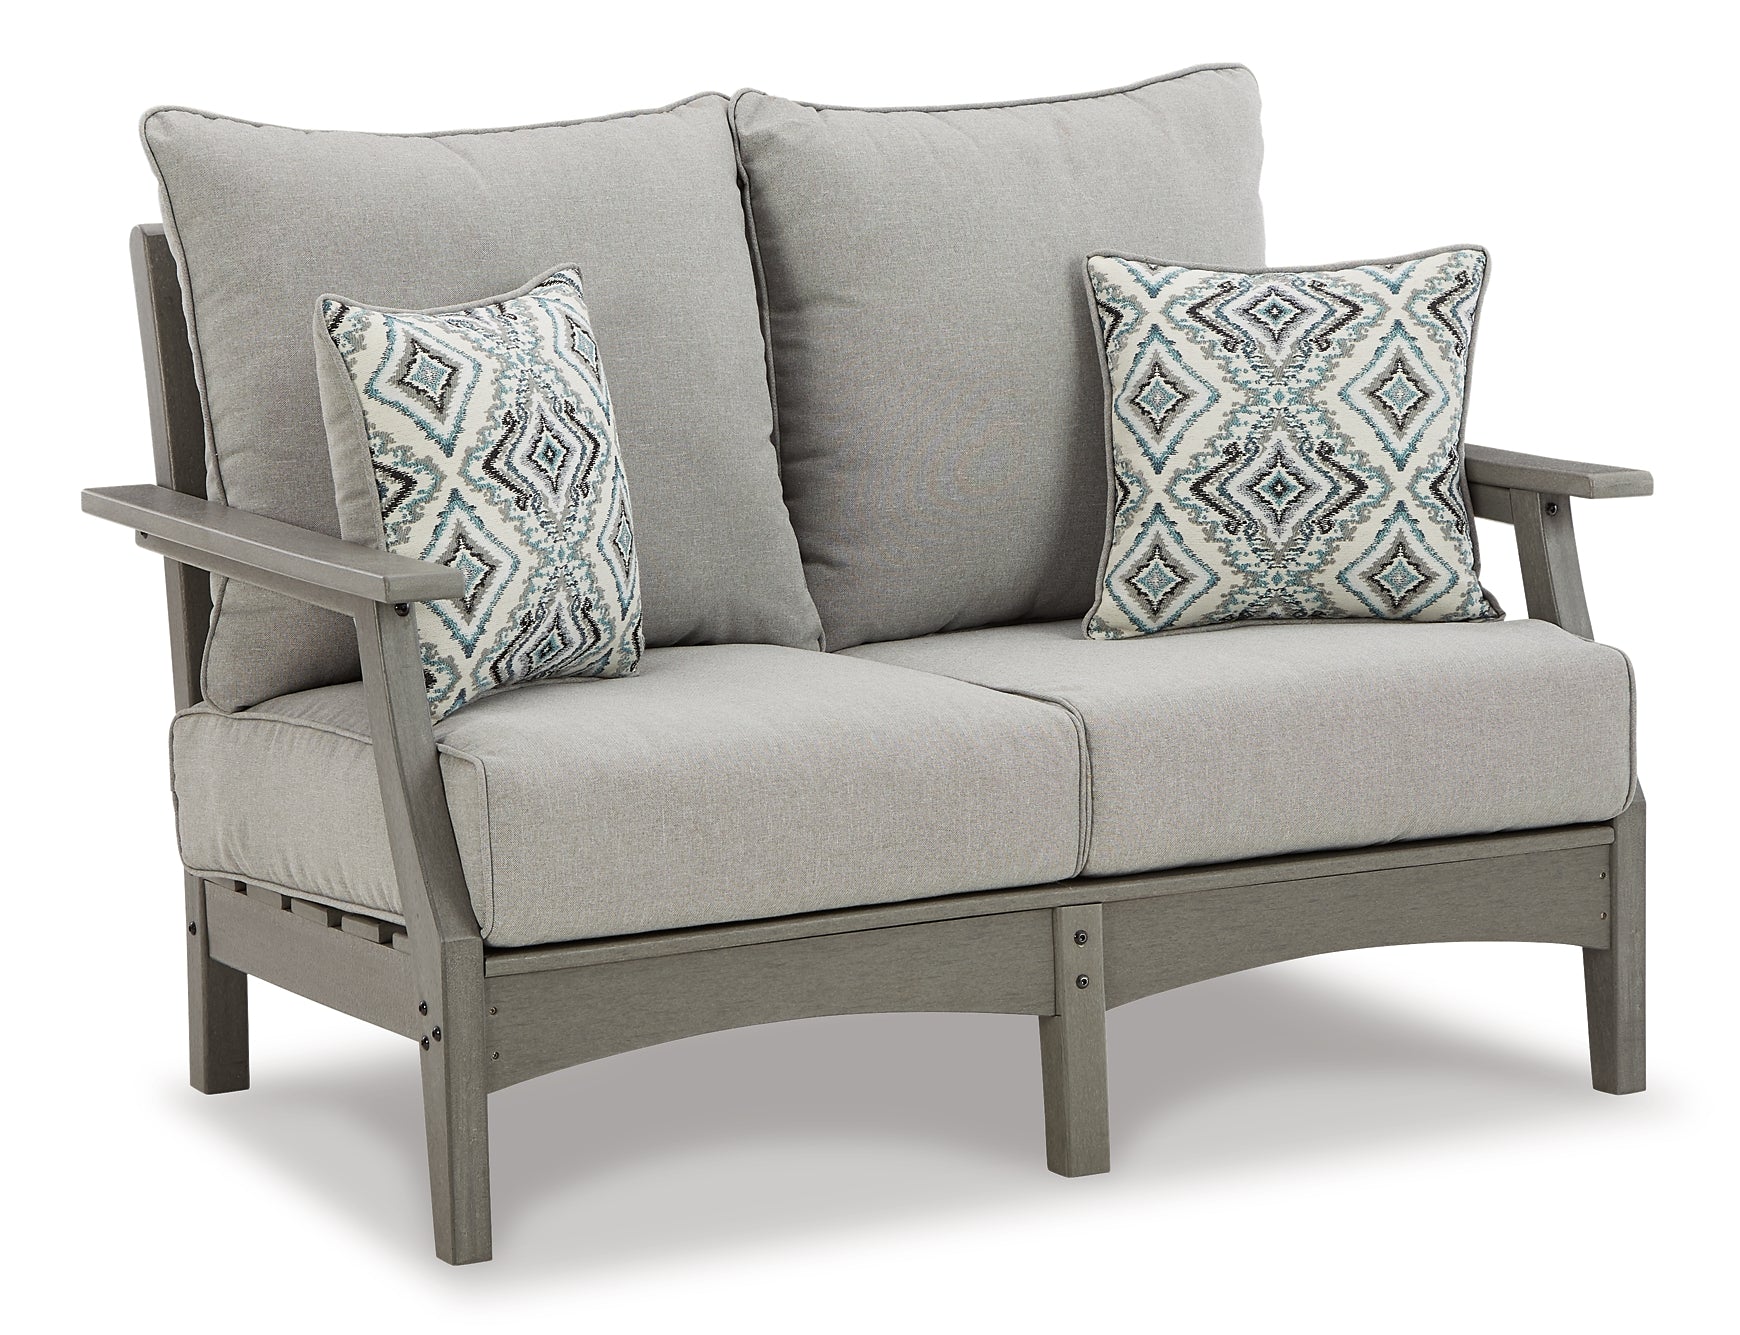 Visola Outdoor Sofa and Loveseat JB's Furniture Furniture, Bedroom, Accessories